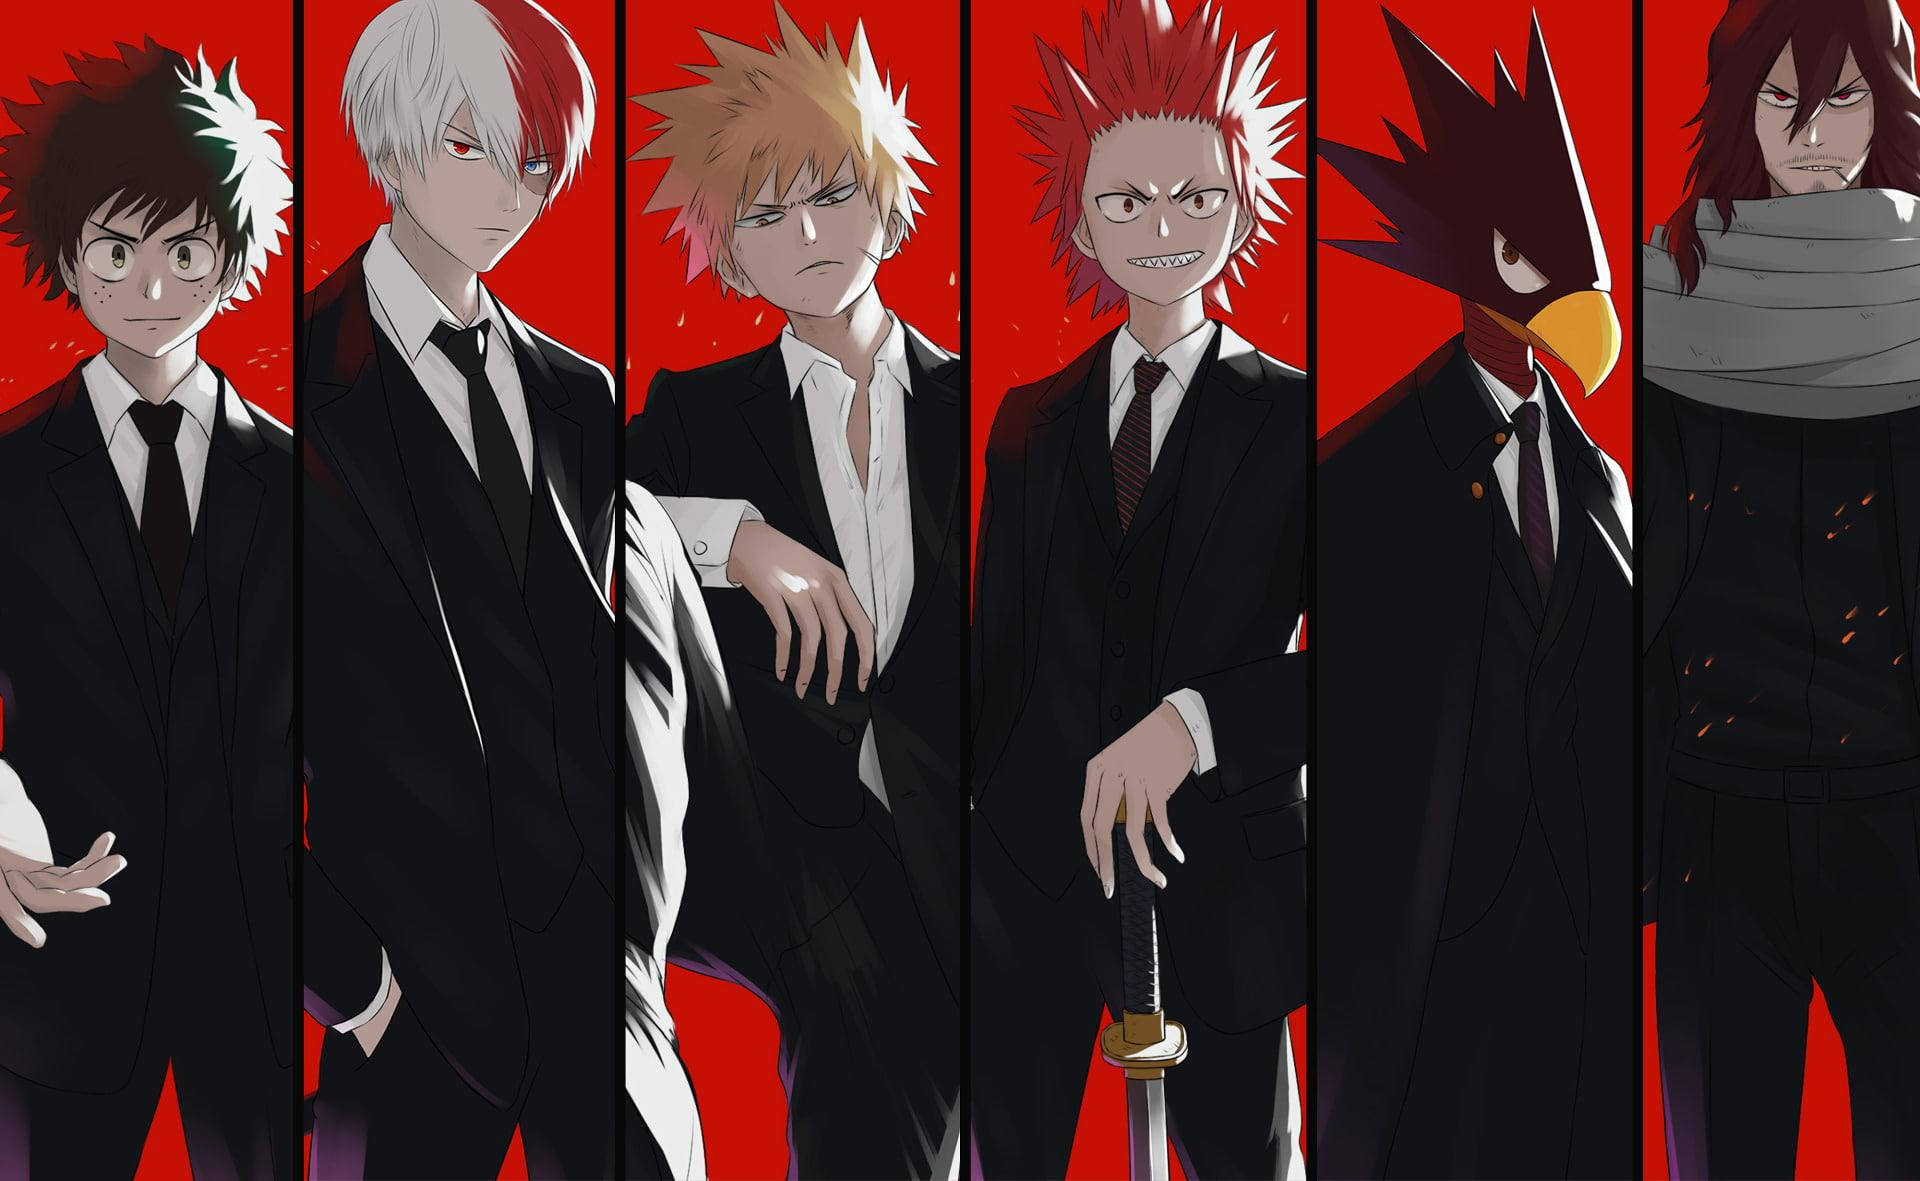 Todobakudeku Formal Black Uniform Background